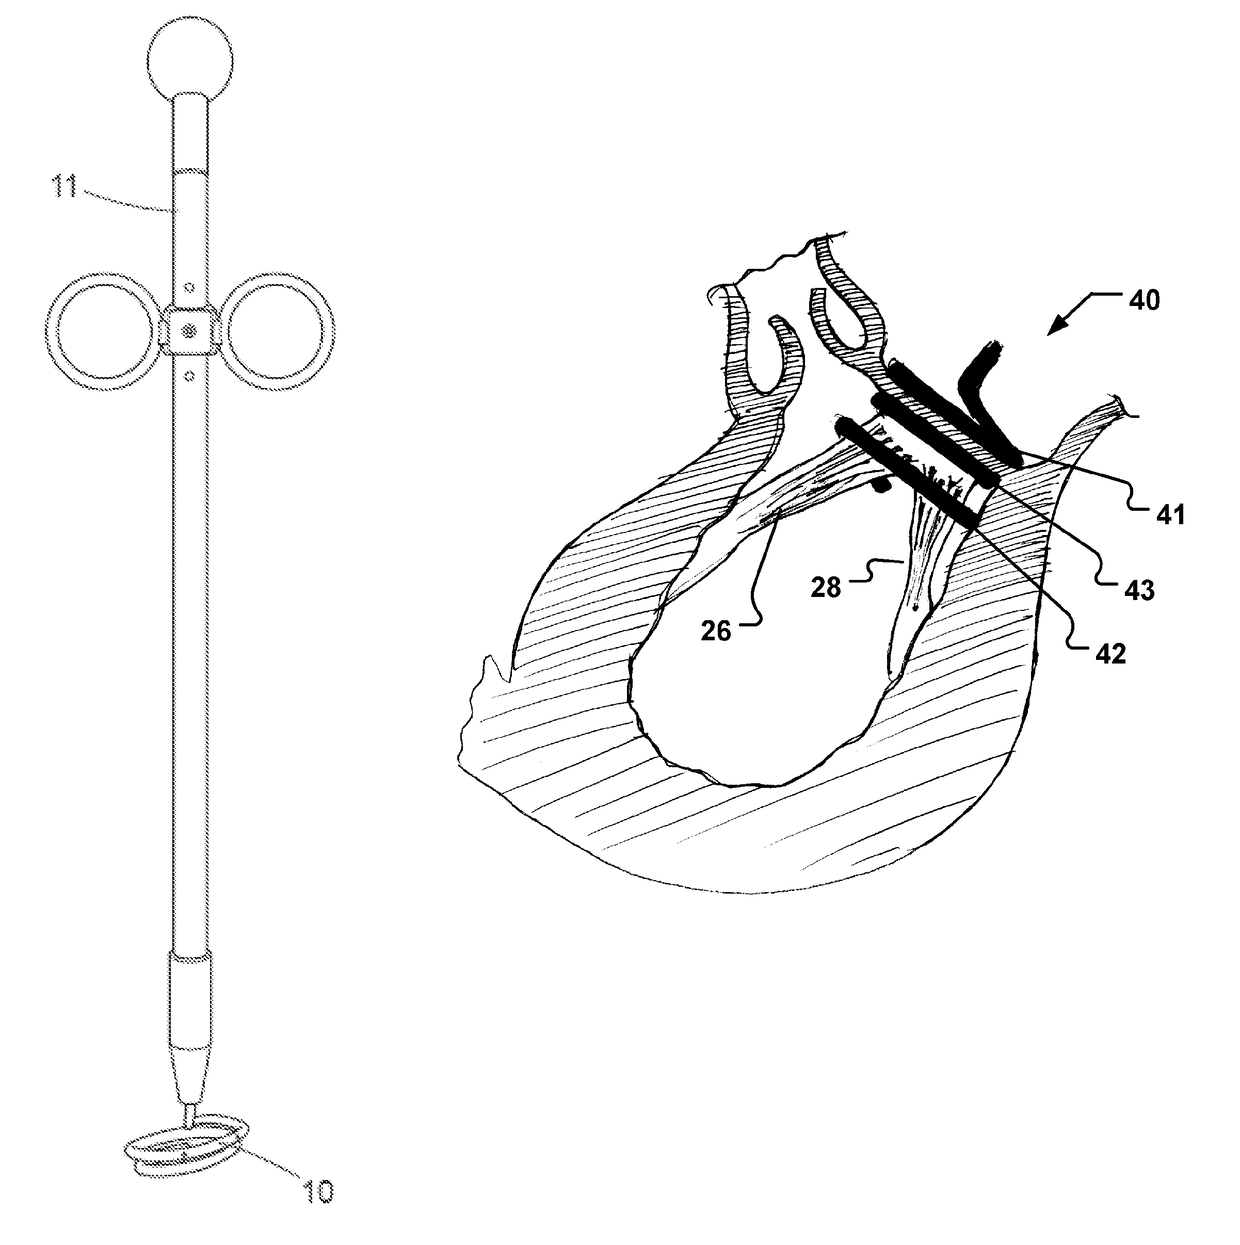 Cardiac valve downsizing device and method